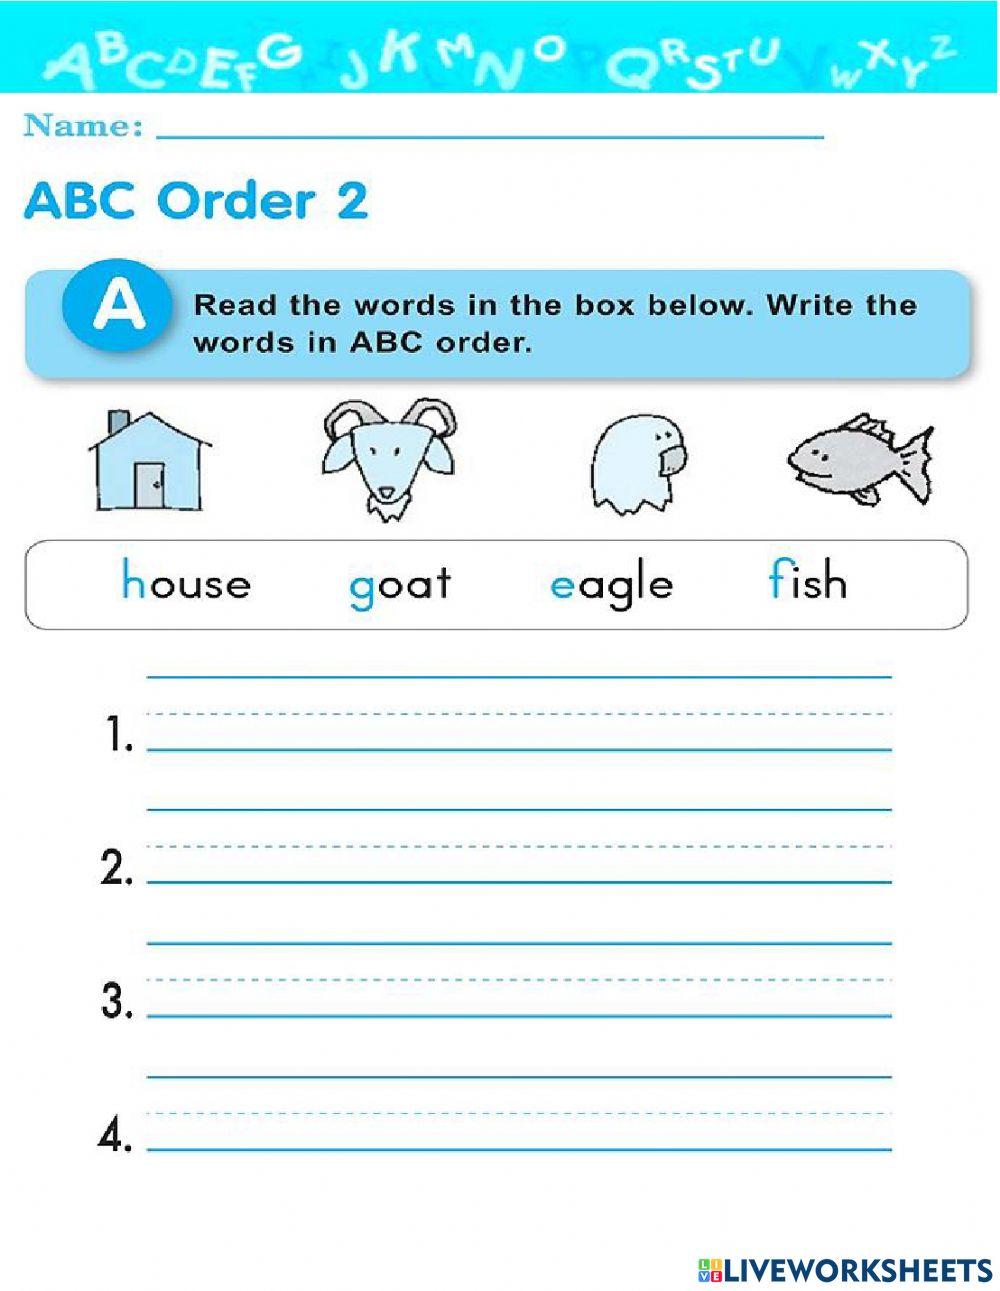 ABC order 2